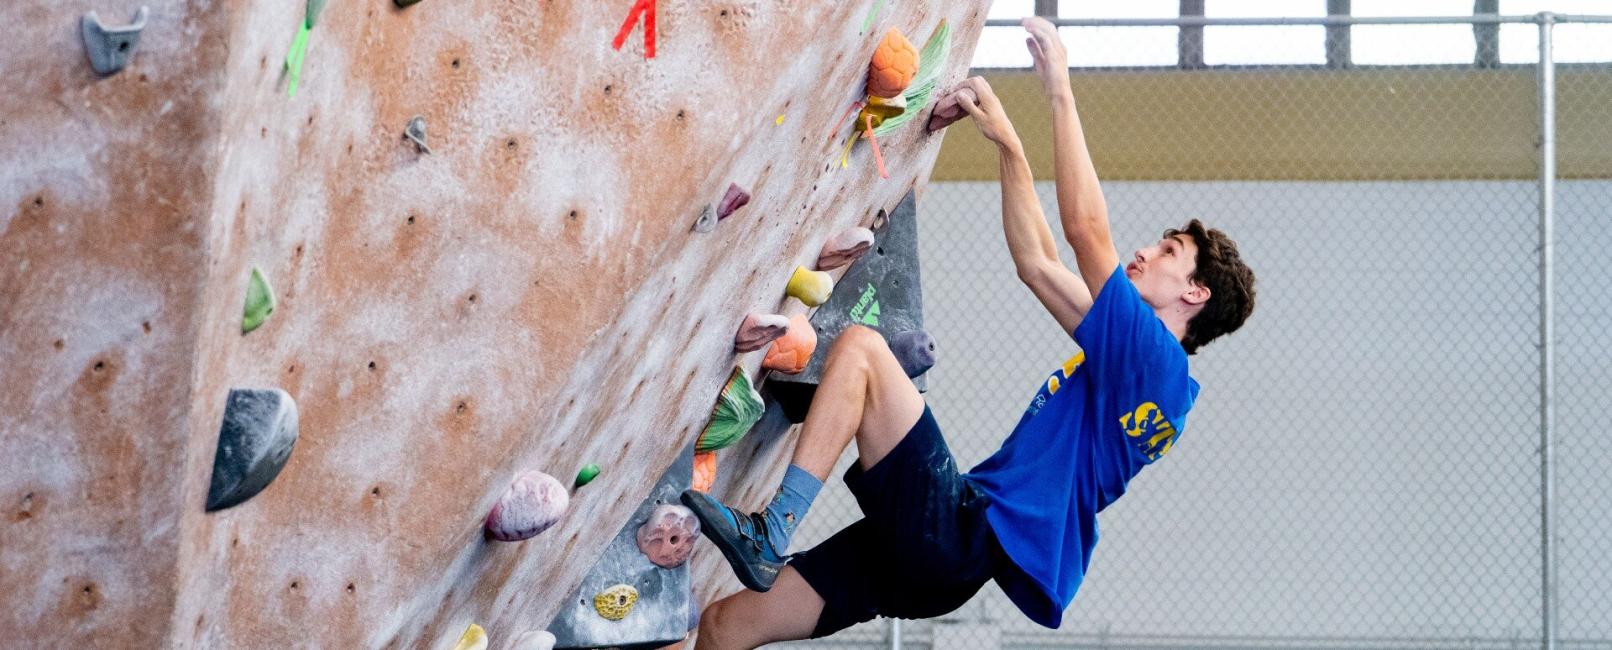 A male student in a blue Pitt tee shirt climbs a rock climbing wall without a harness.